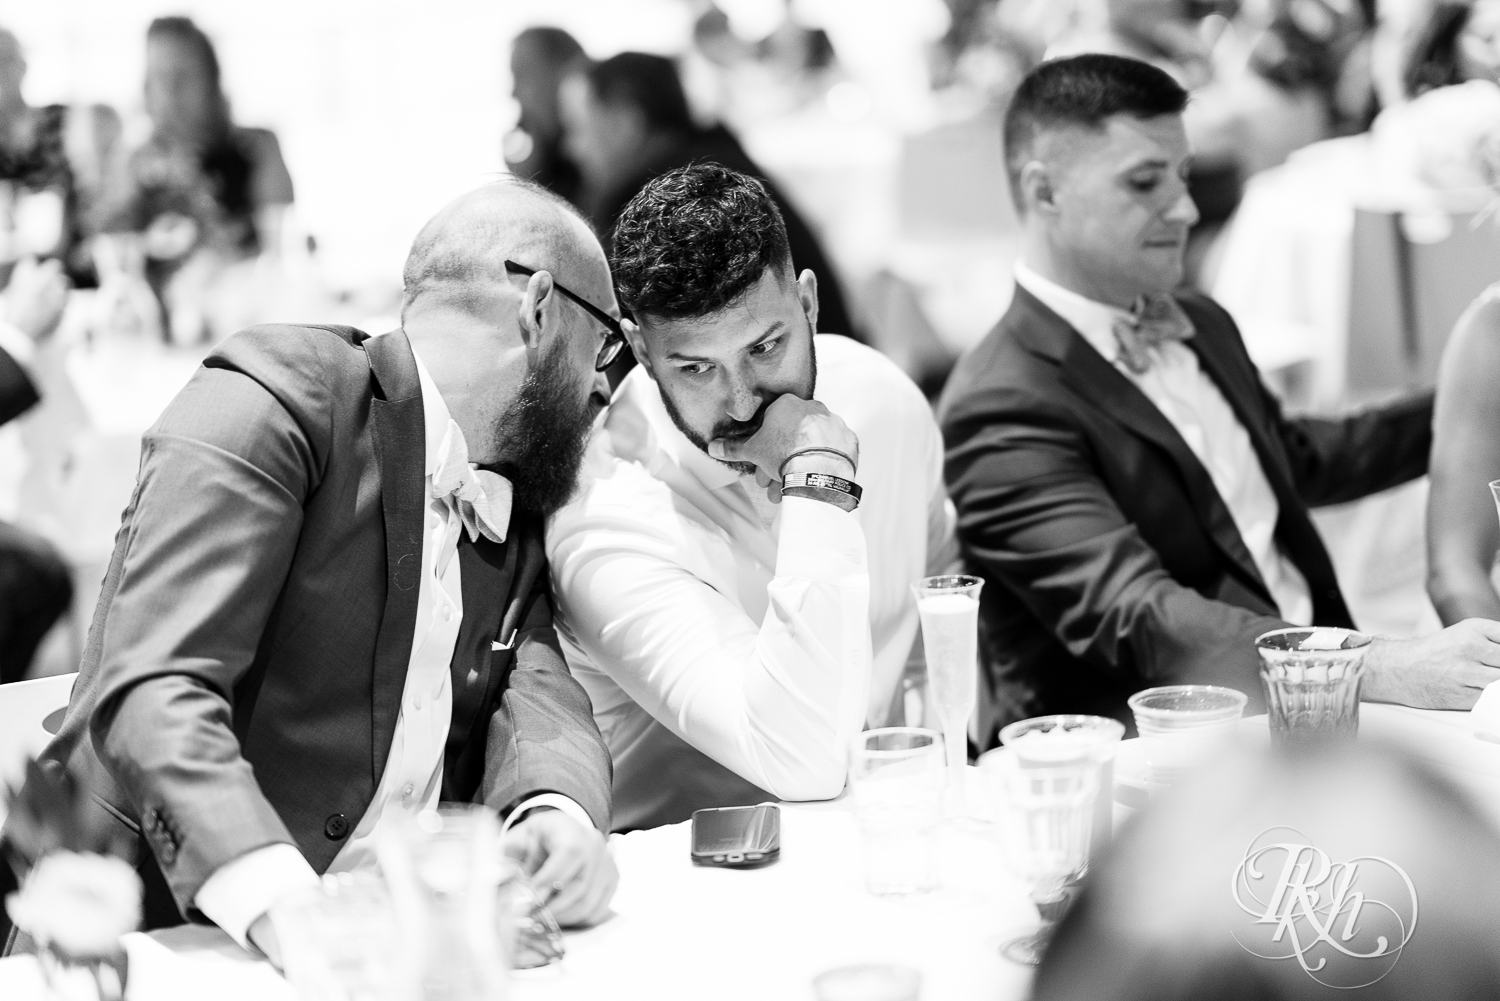 Groomsmen converse during wedding reception at head table at Saint Paul Event Center in Saint Paul, Minnesota.